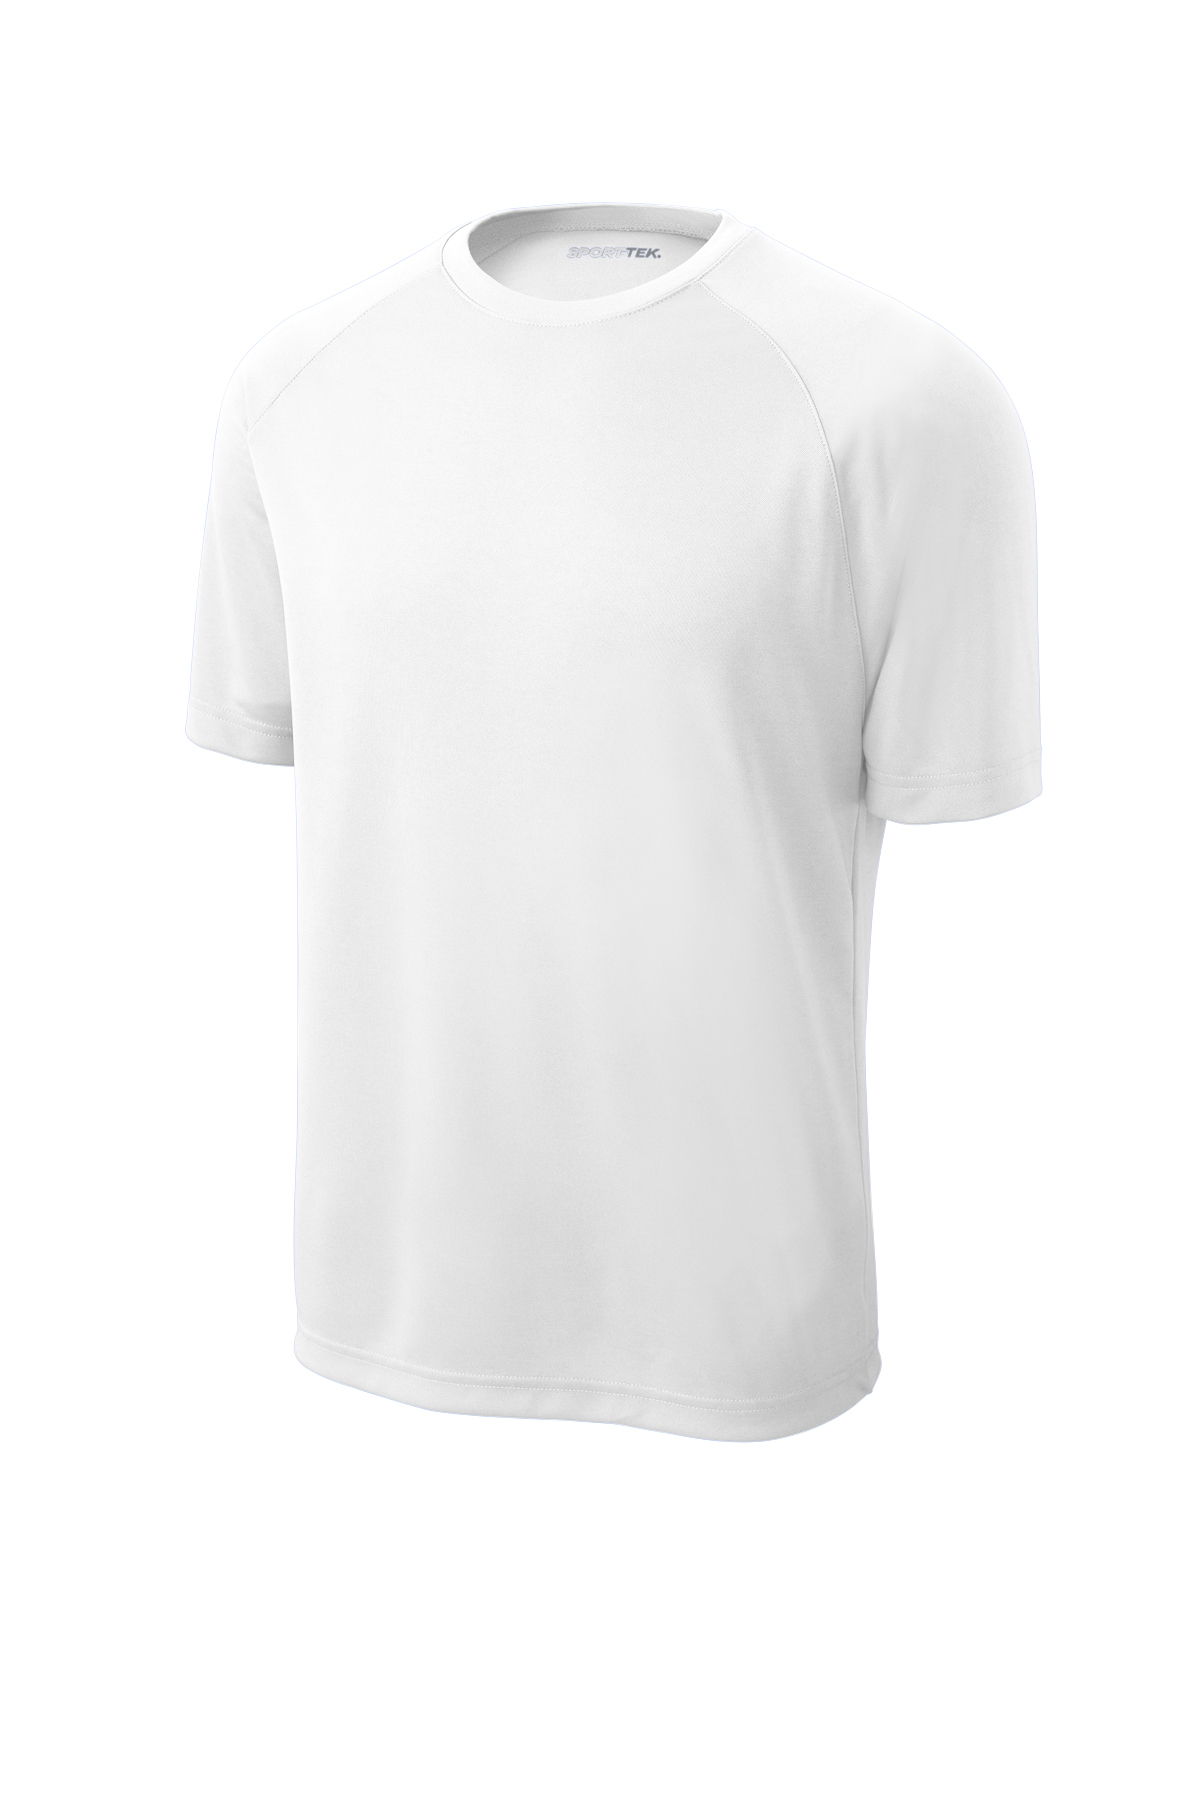 Sport-Tek Dry Zone Short Sleeve Raglan T-Shirt | Product | SanMar